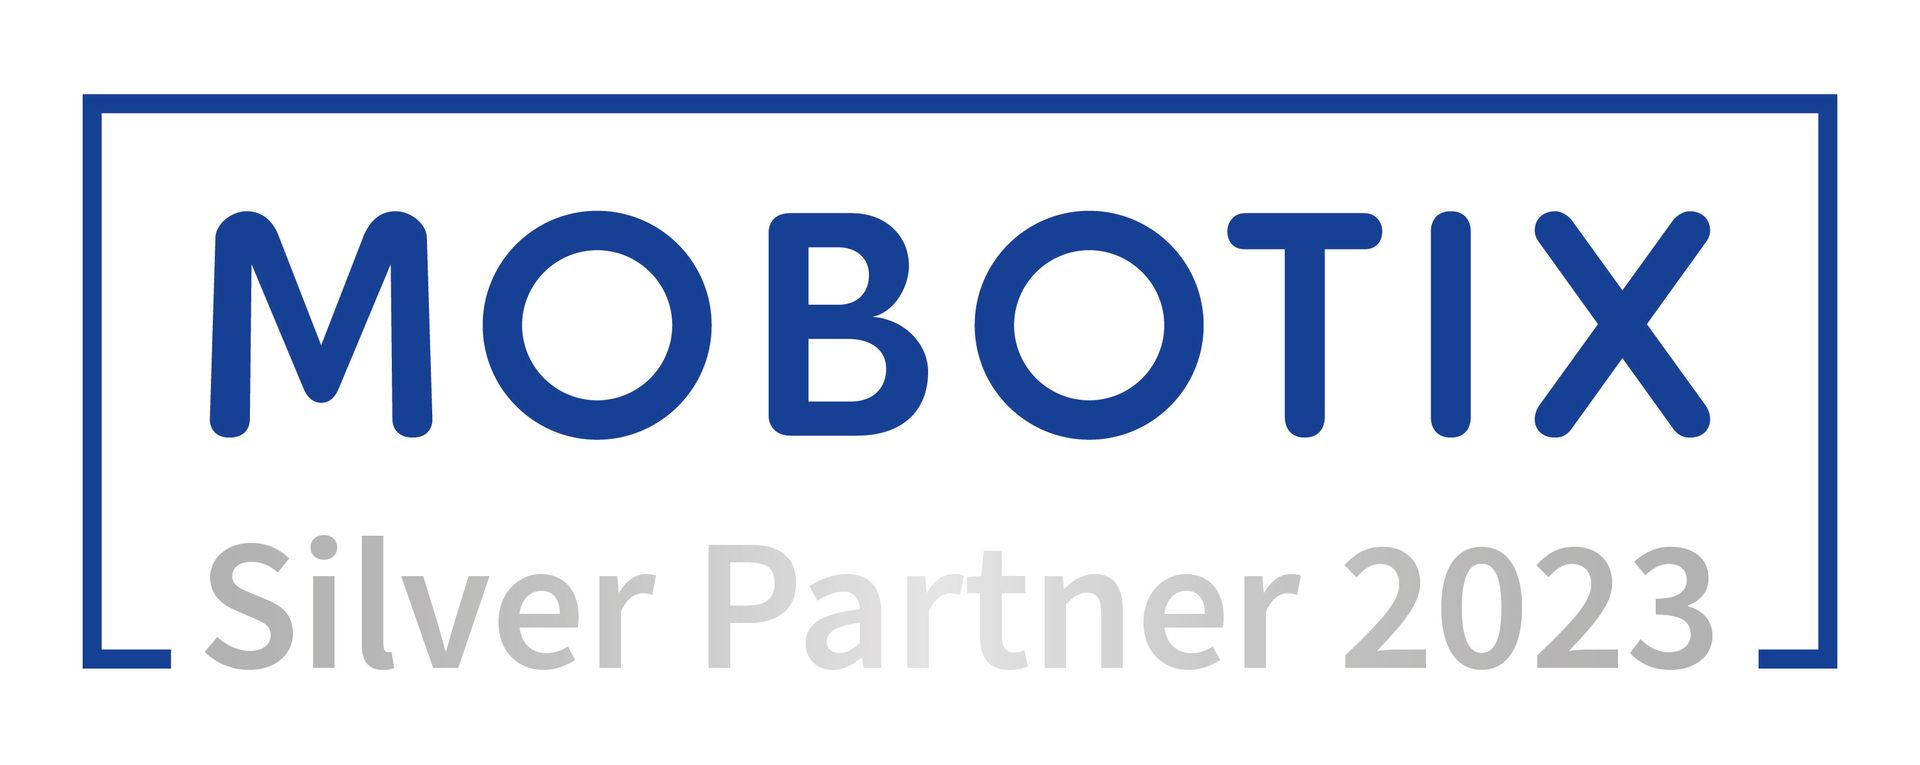 Jansen_Logo_MOBOTIX_Silver_Partner_2021